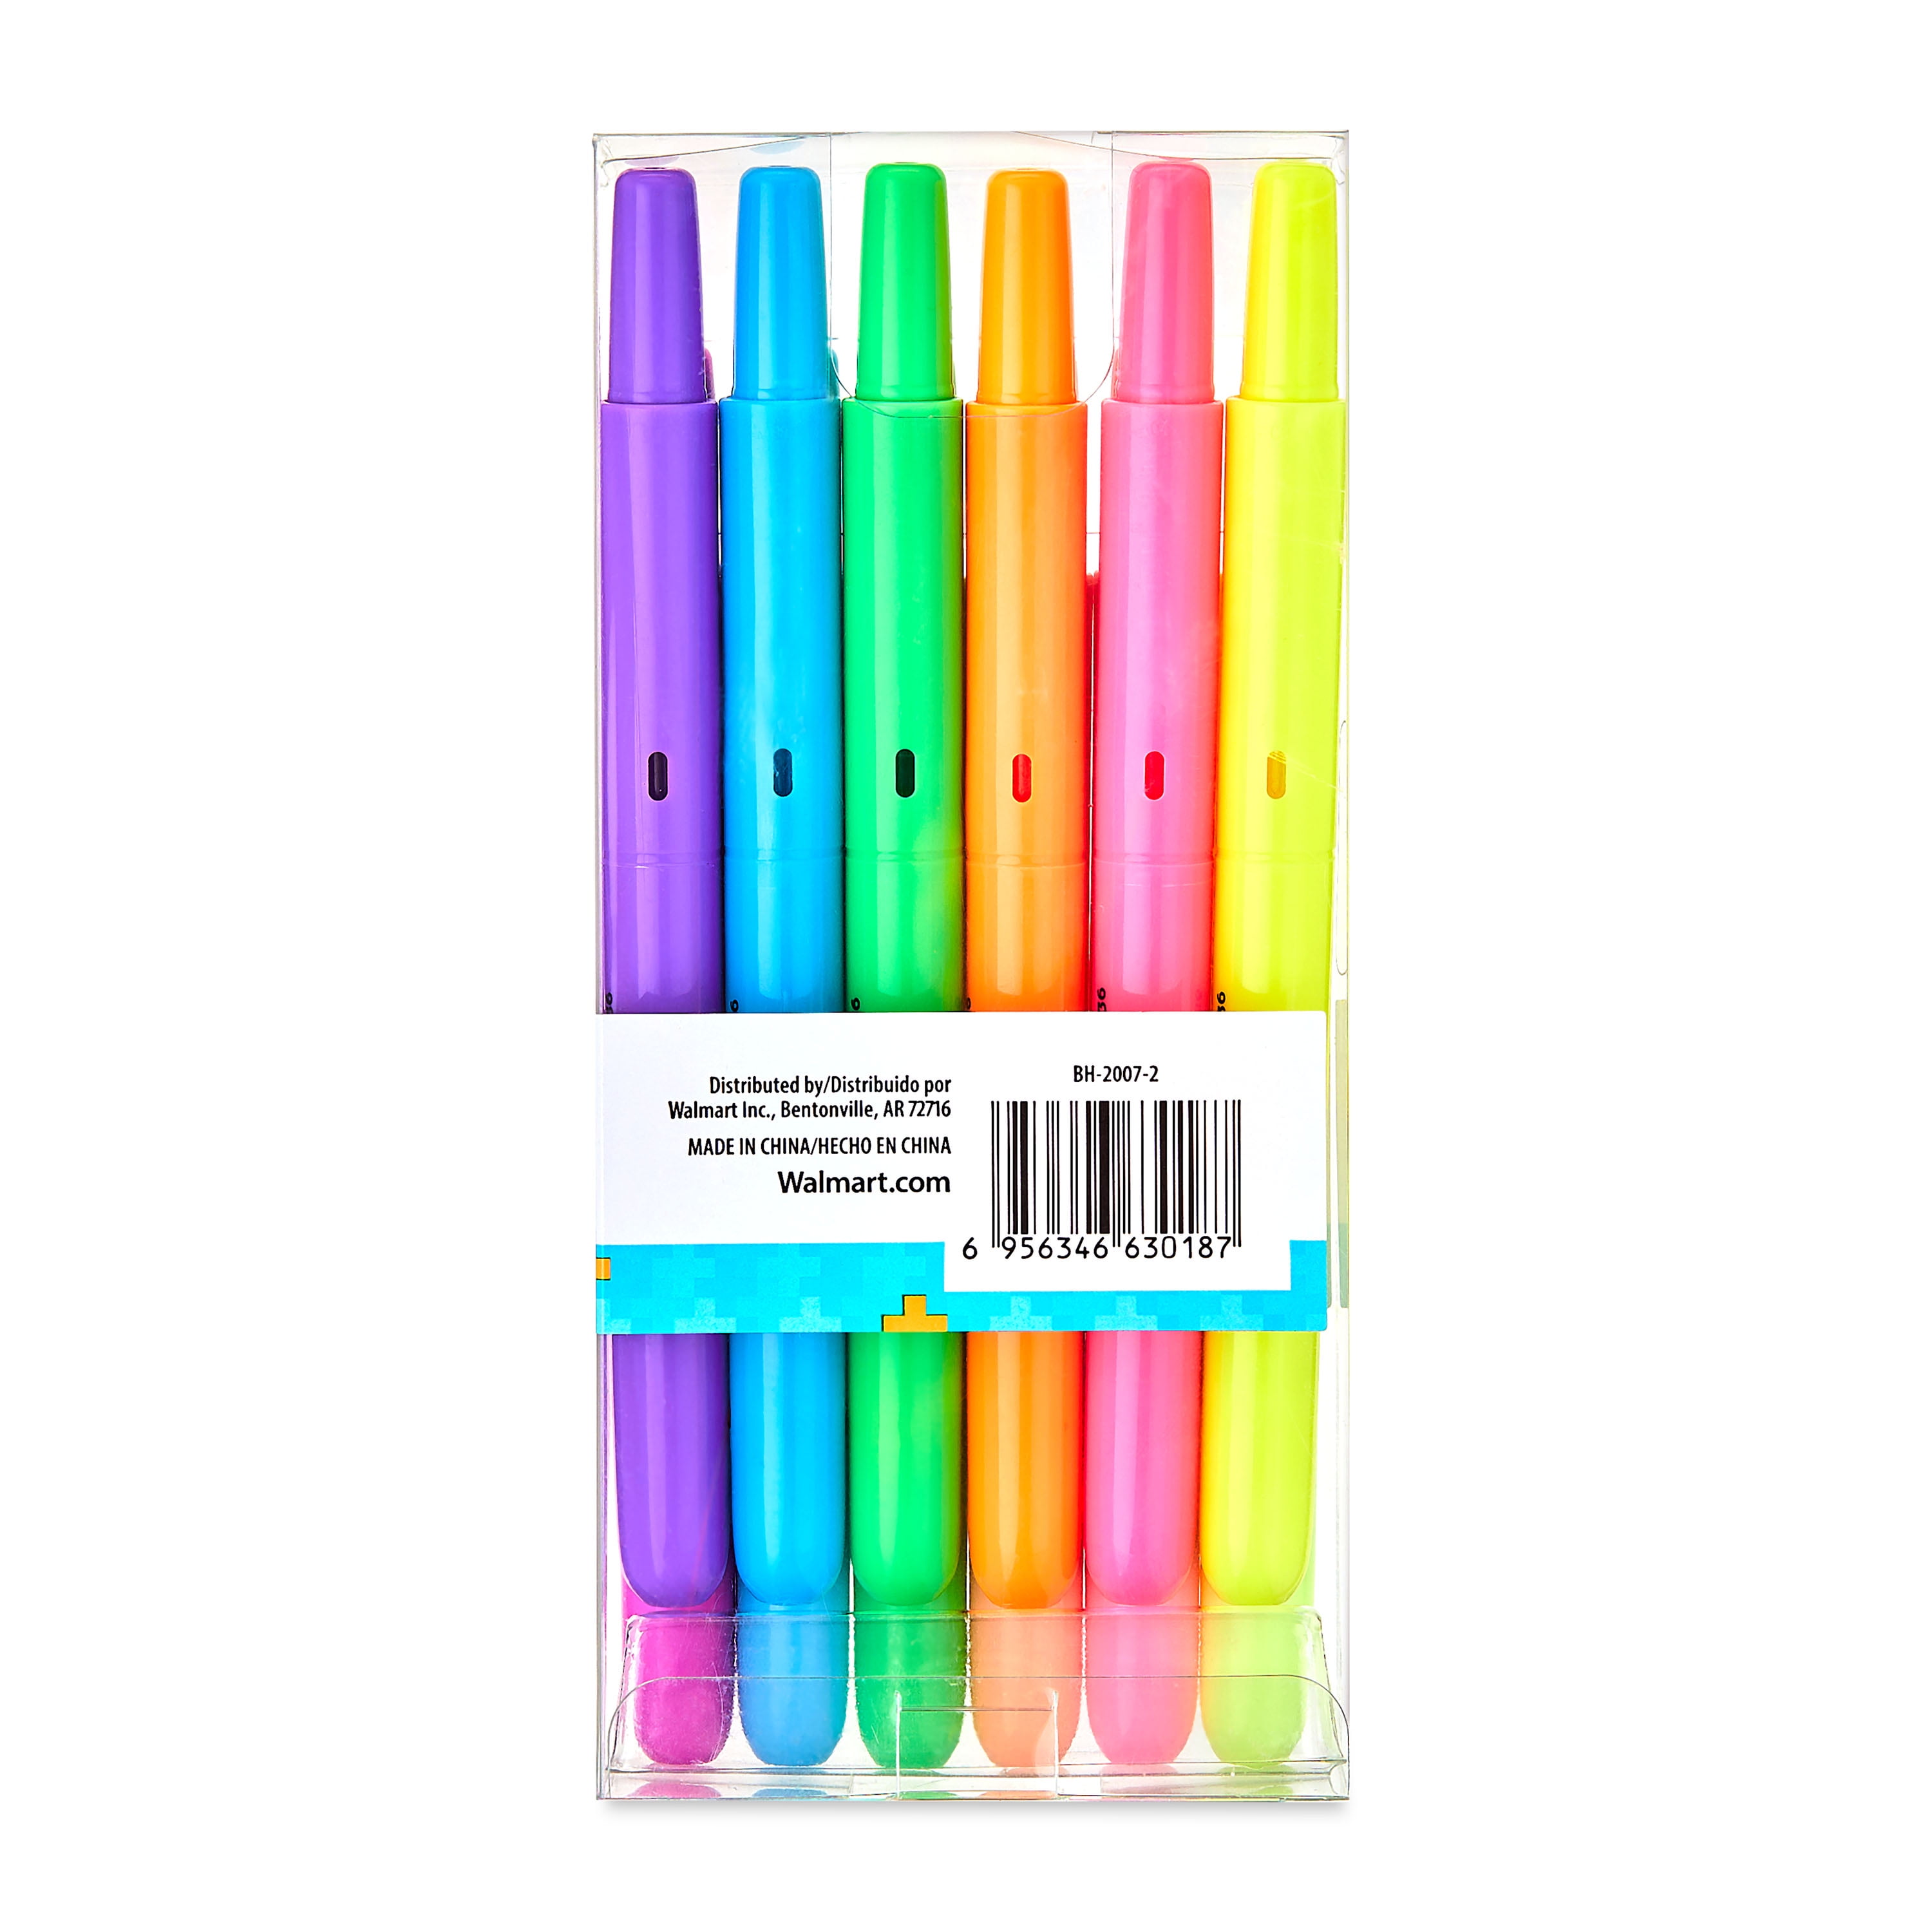 Pen + Gear Liquid Highlighters, 4 Count – C&I Office Supplies S.A.